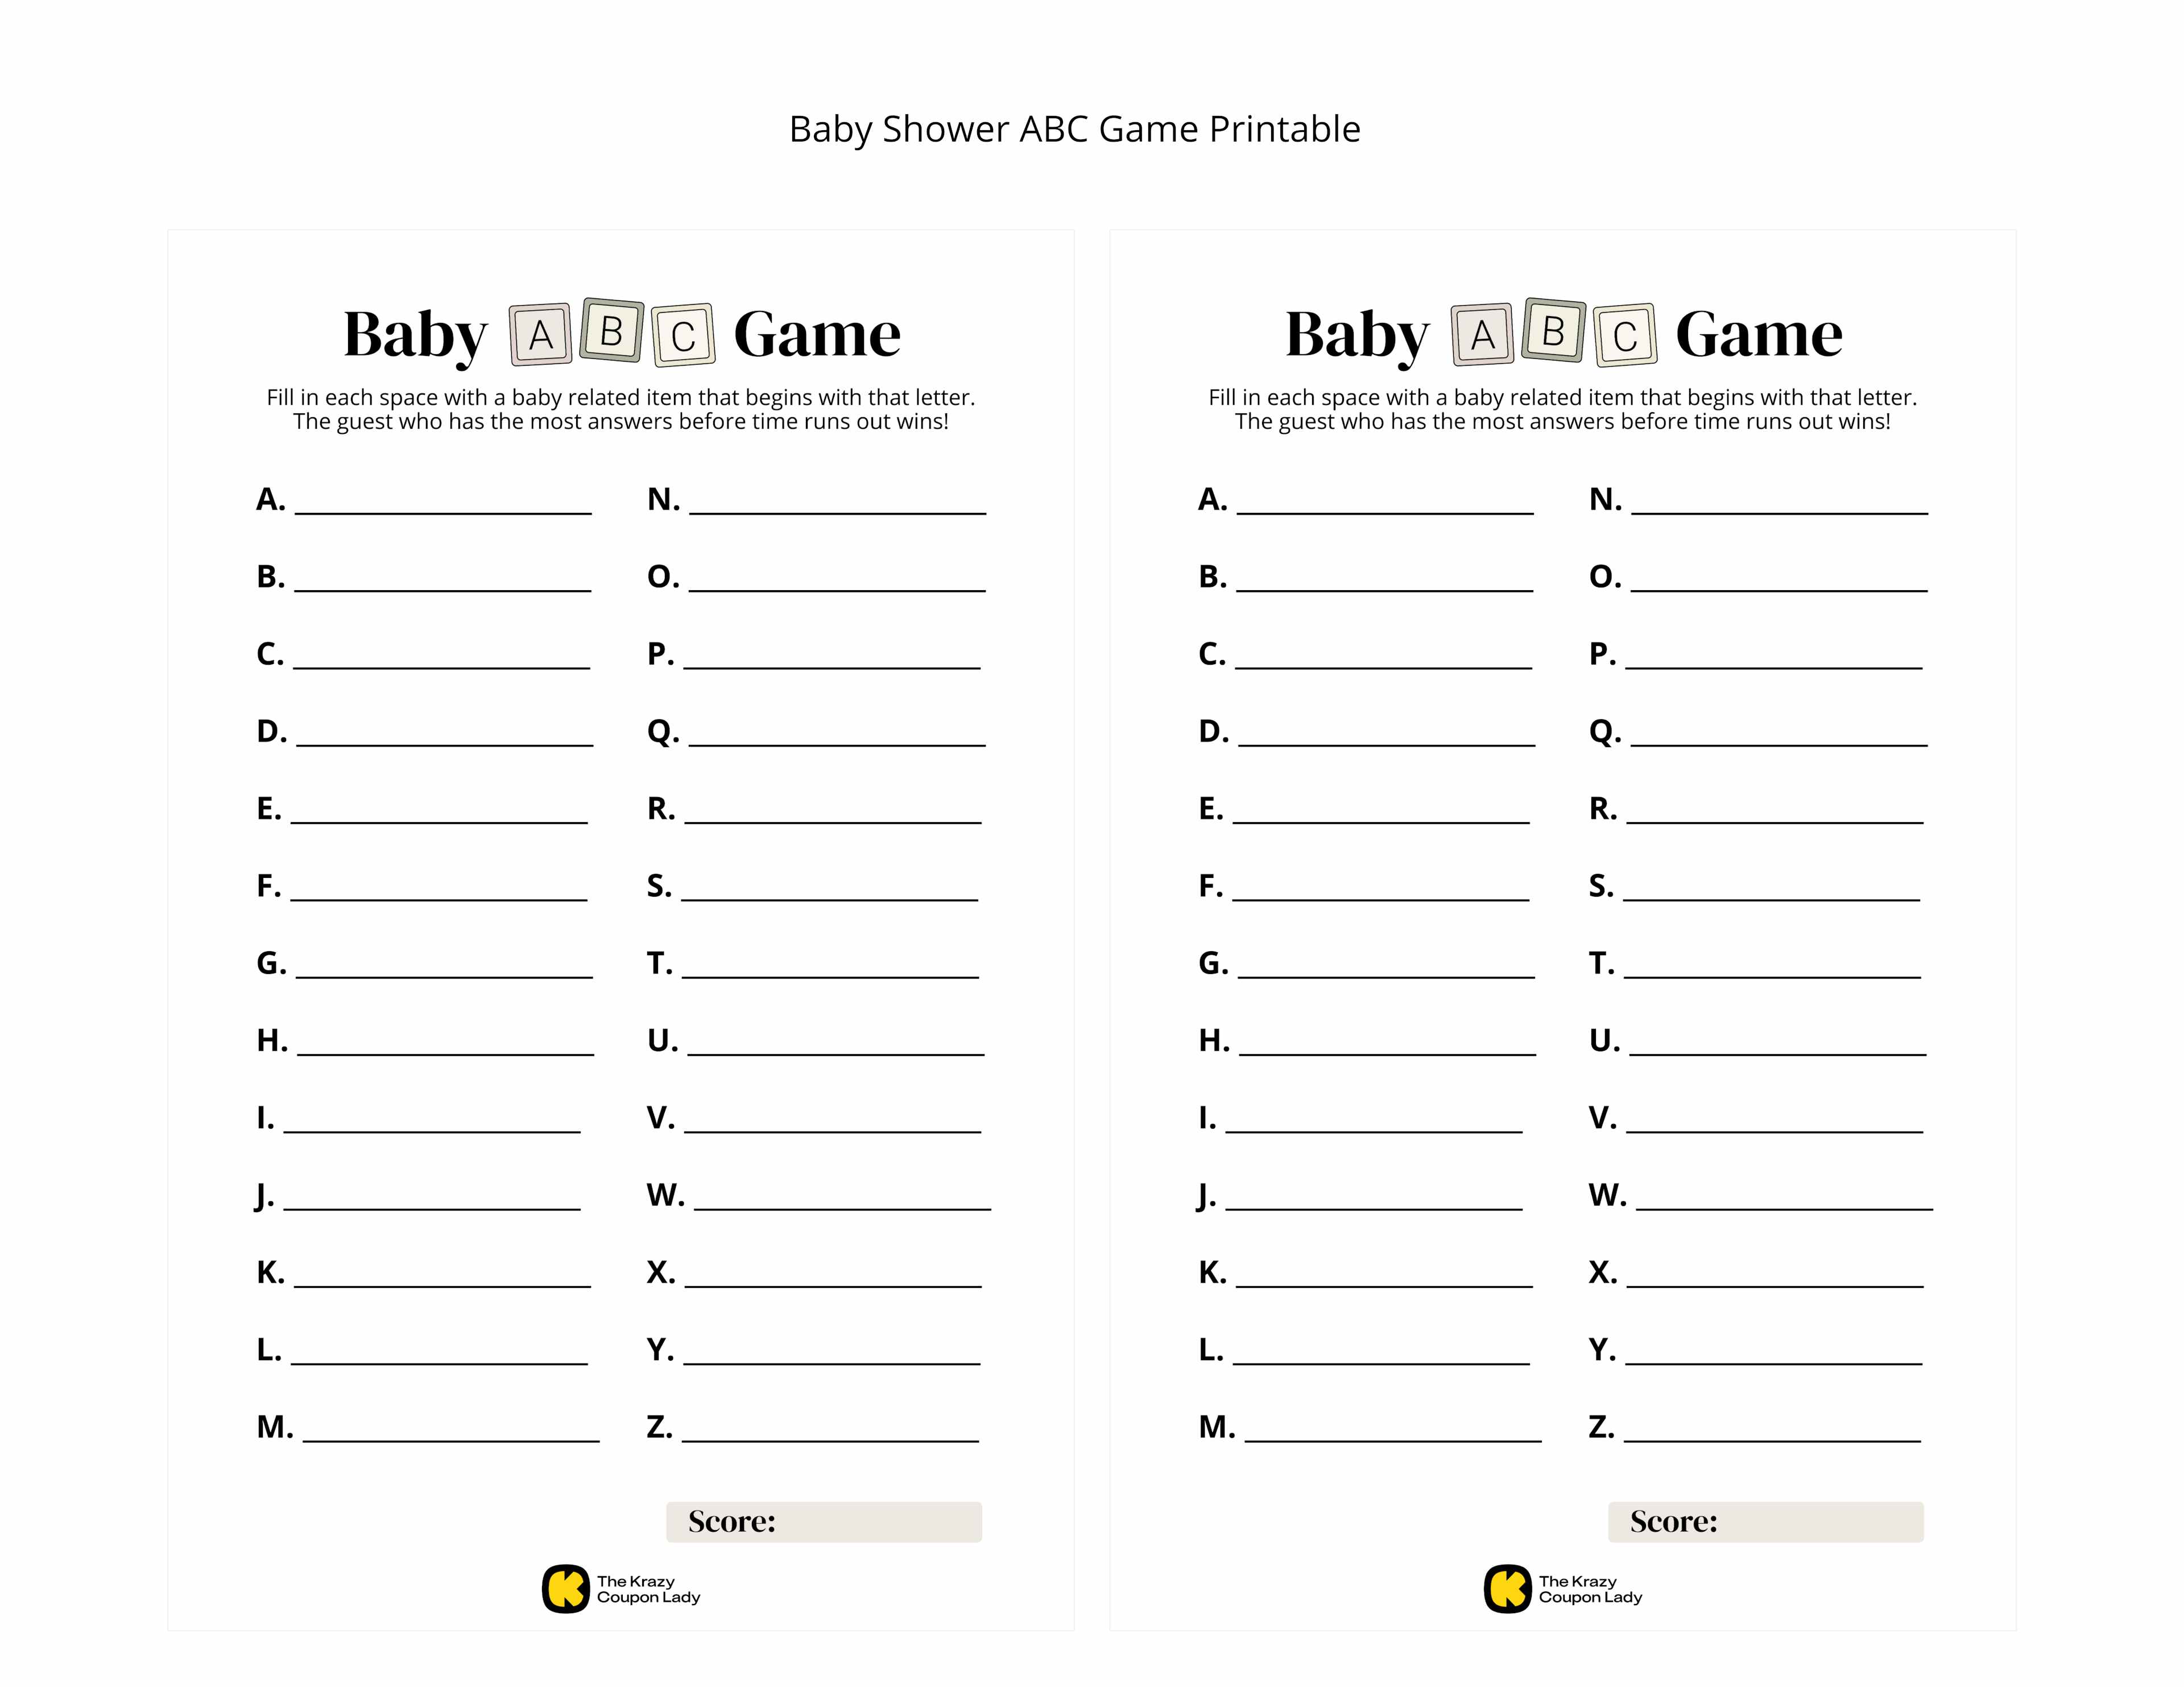 Baby Shower ABC Game printable